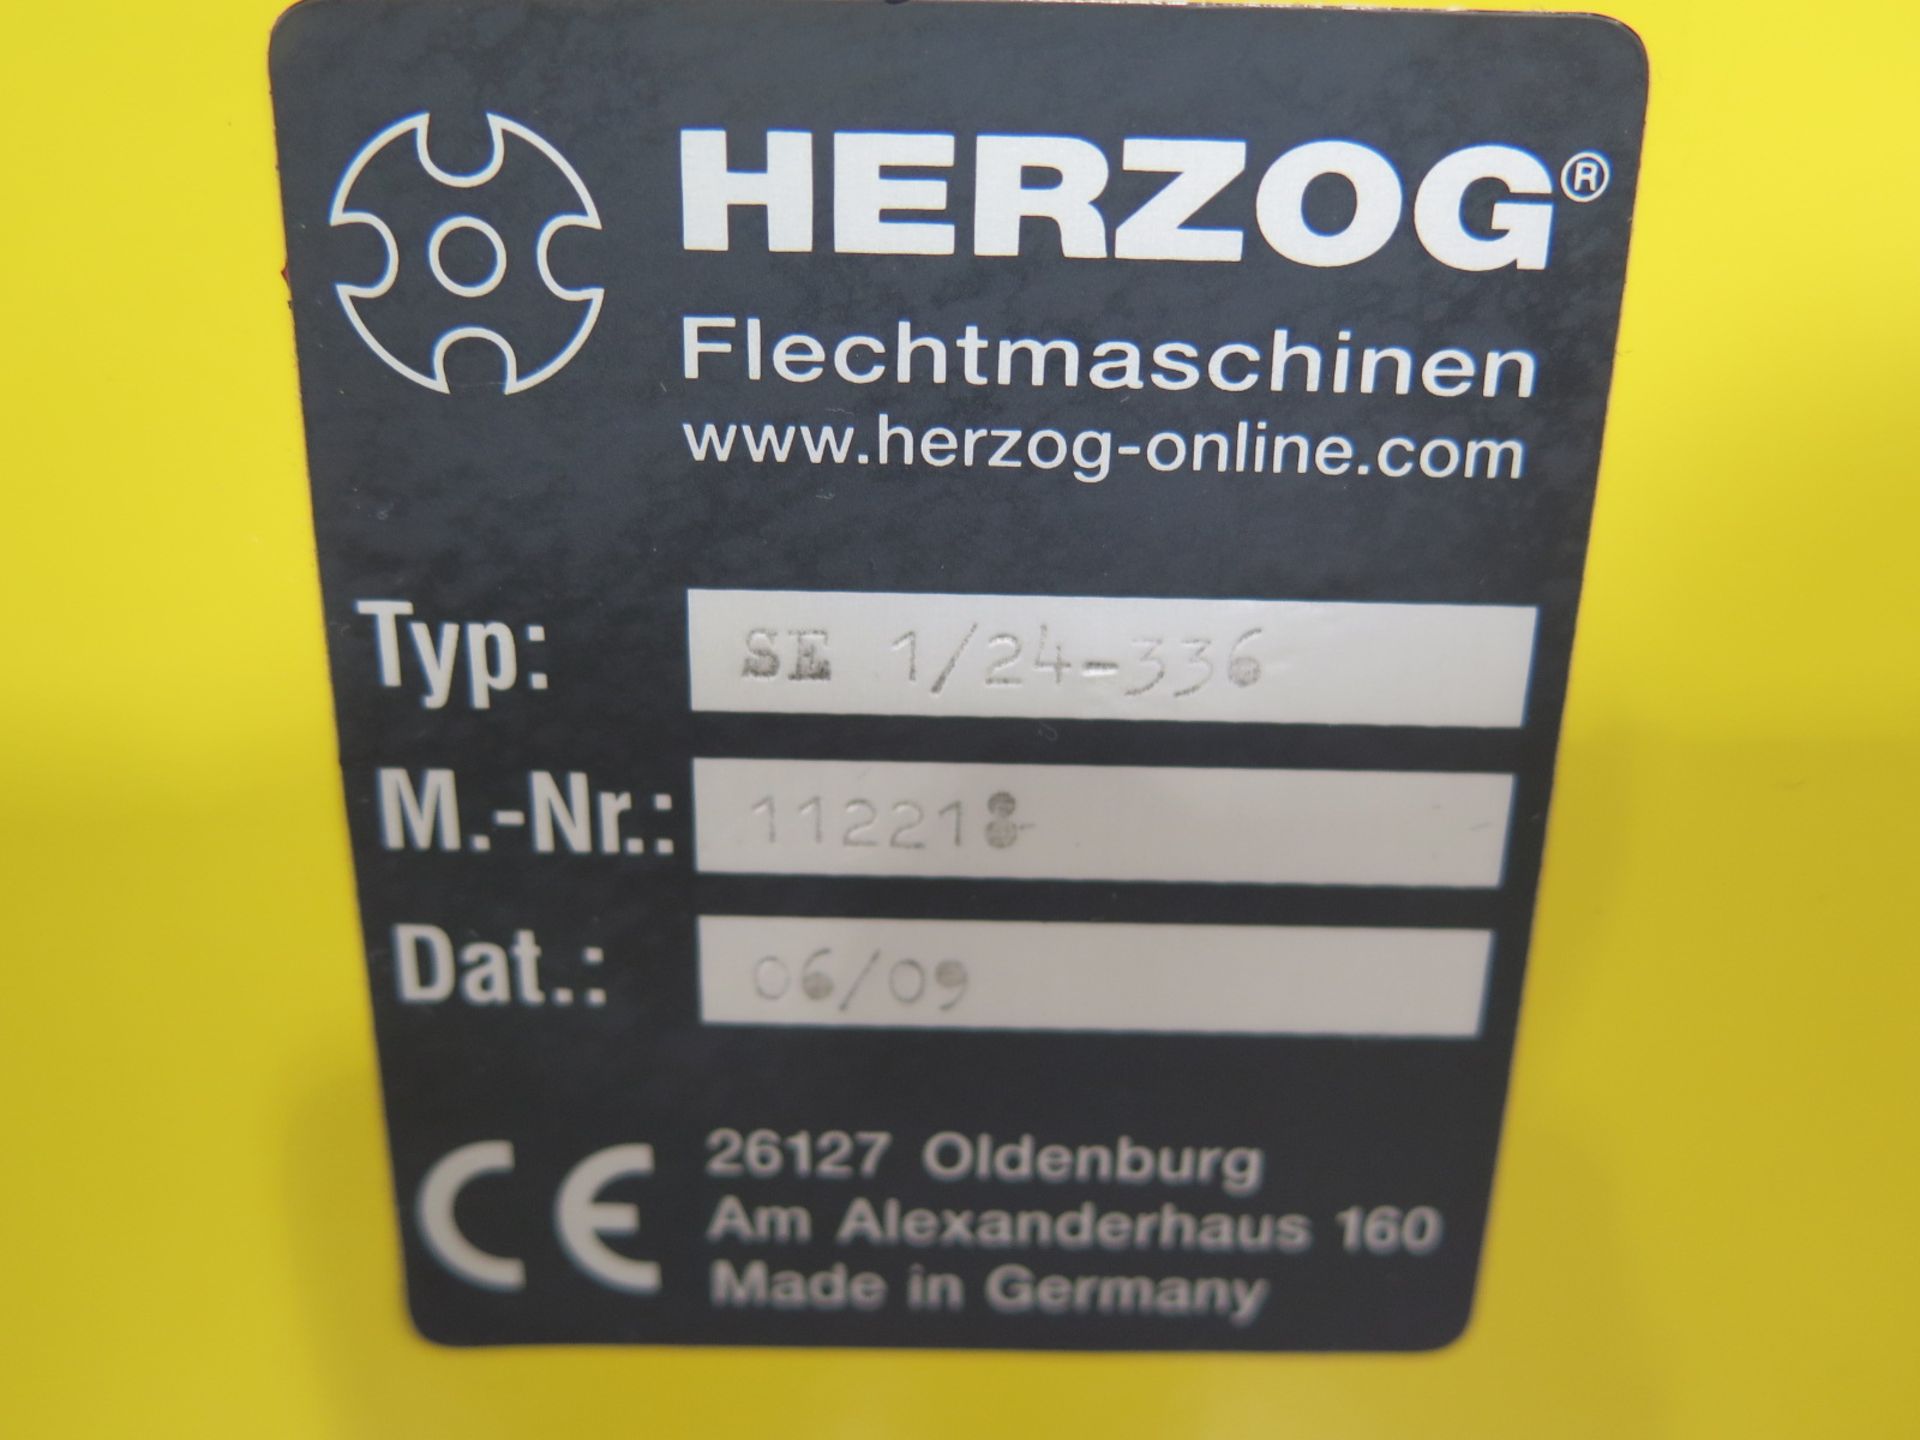 2009 Herzog mdl. SE 1/24-336 Automatic Rope Braiding Machine s/n 112218 w/ Seimens Digital Controls, - Image 10 of 10